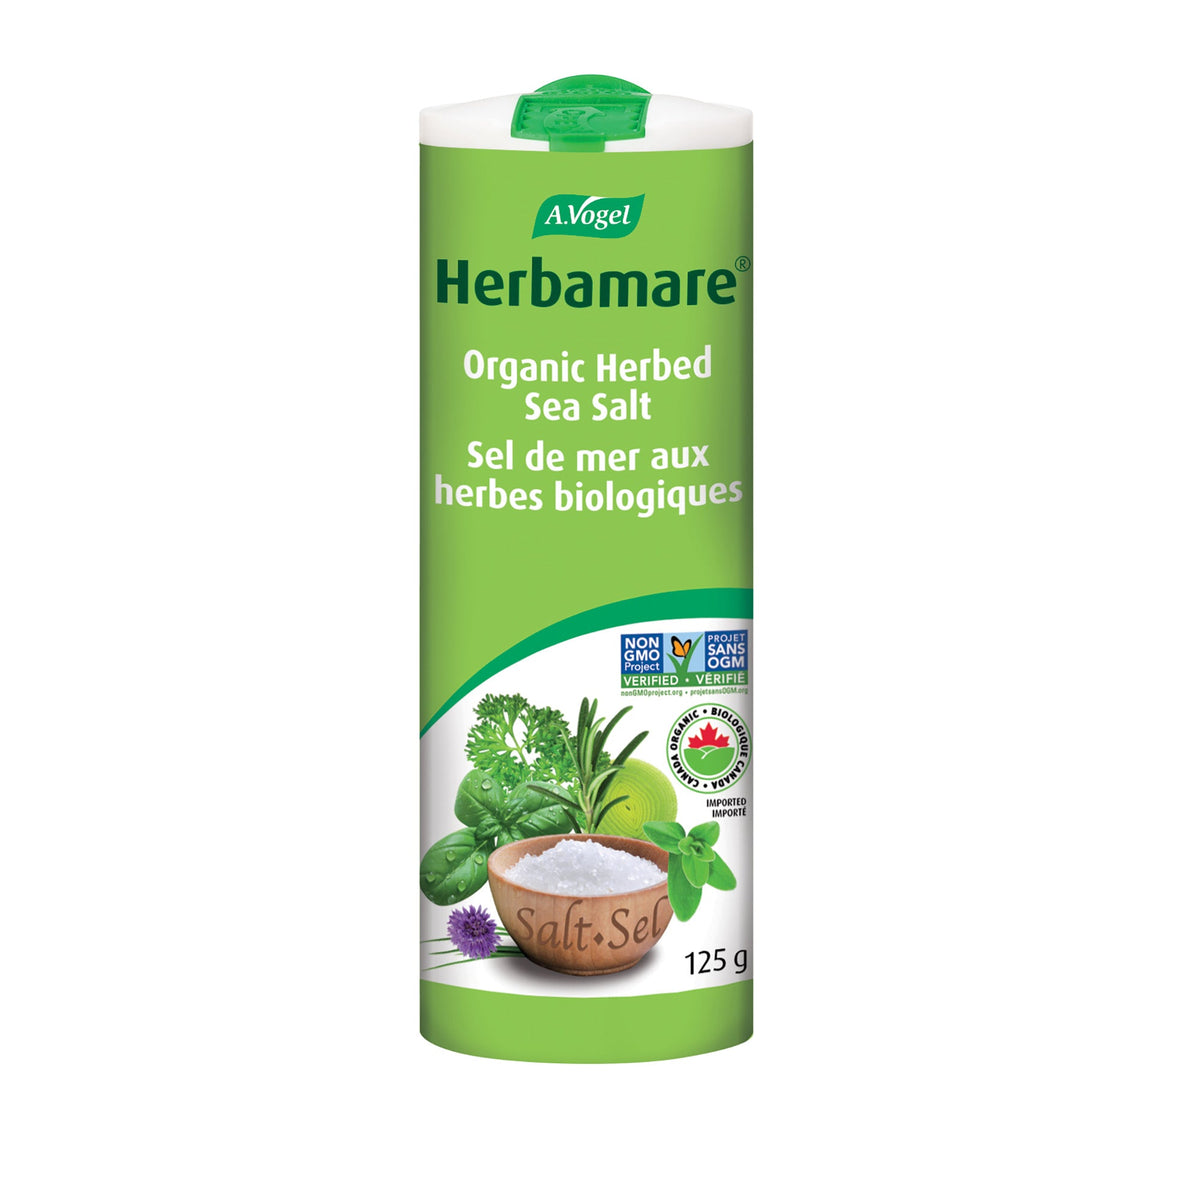 Herbamare Original - Organic Herbed Sea Salt - A.Vogel Canada